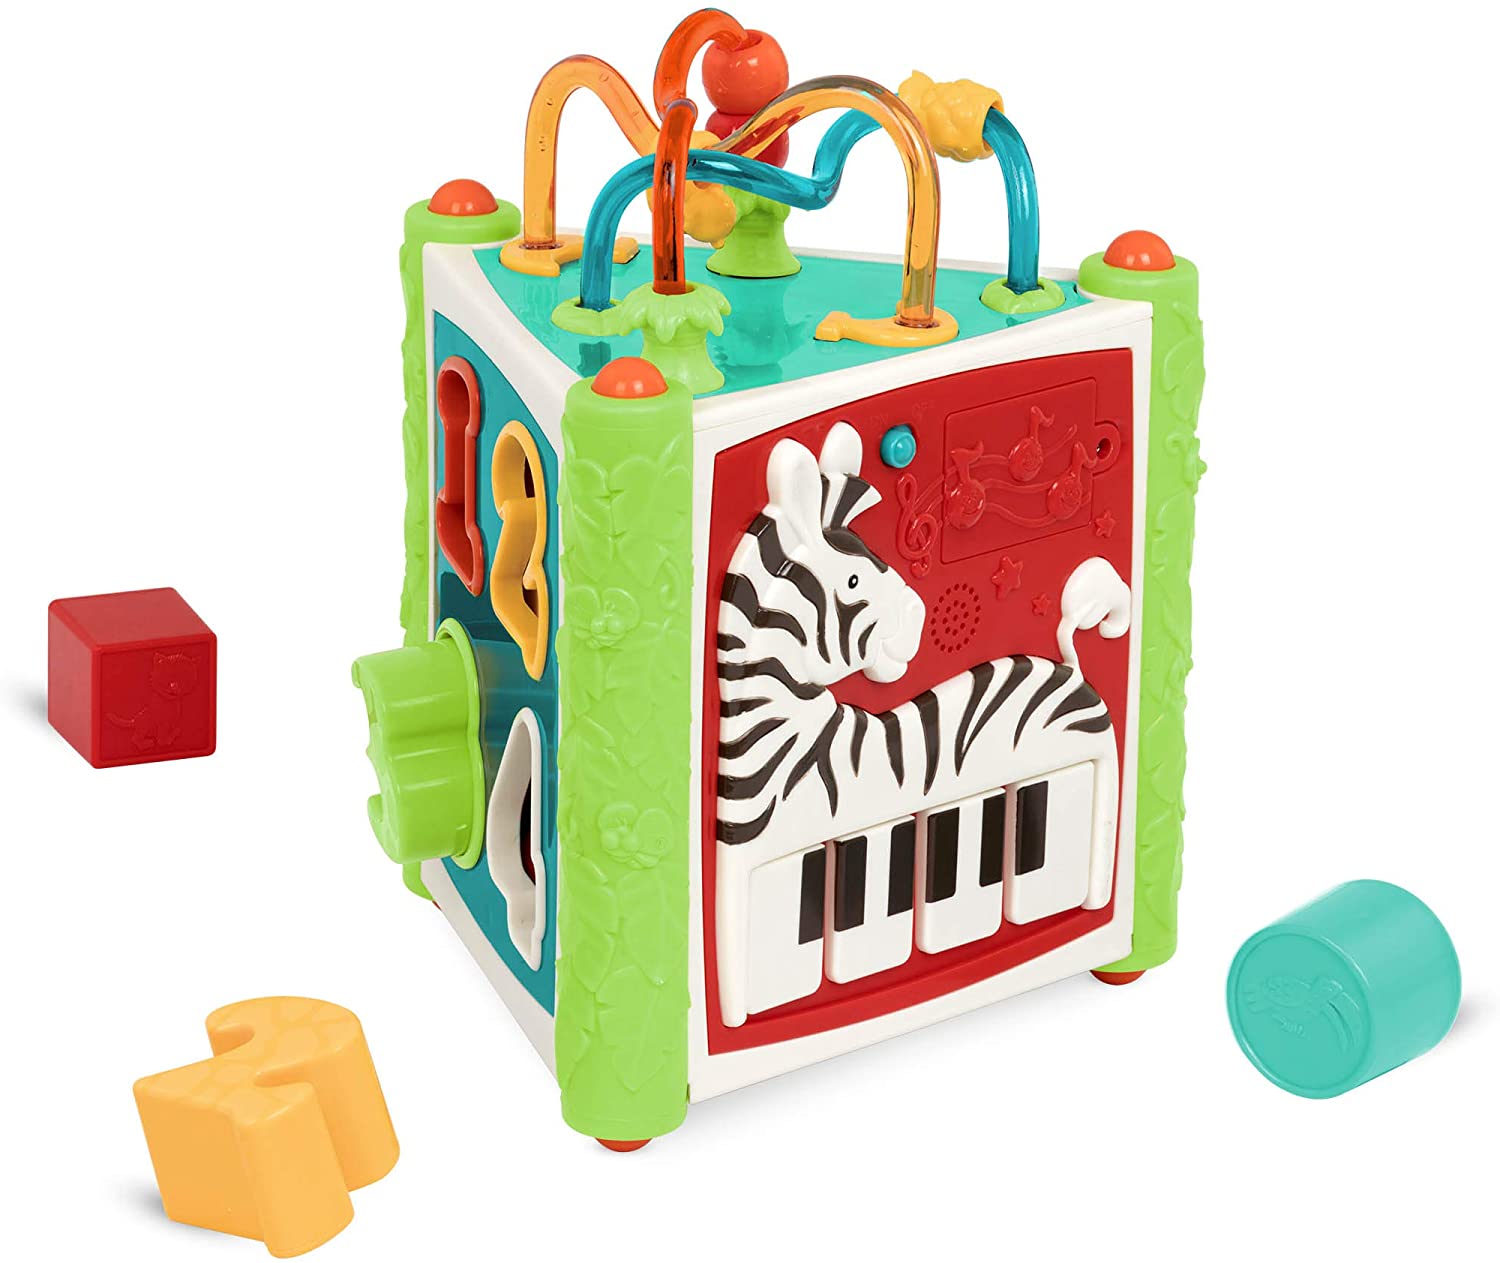 Battat Activity Cube & Shape Sorter Learning Toy $5.98 @ Amazon